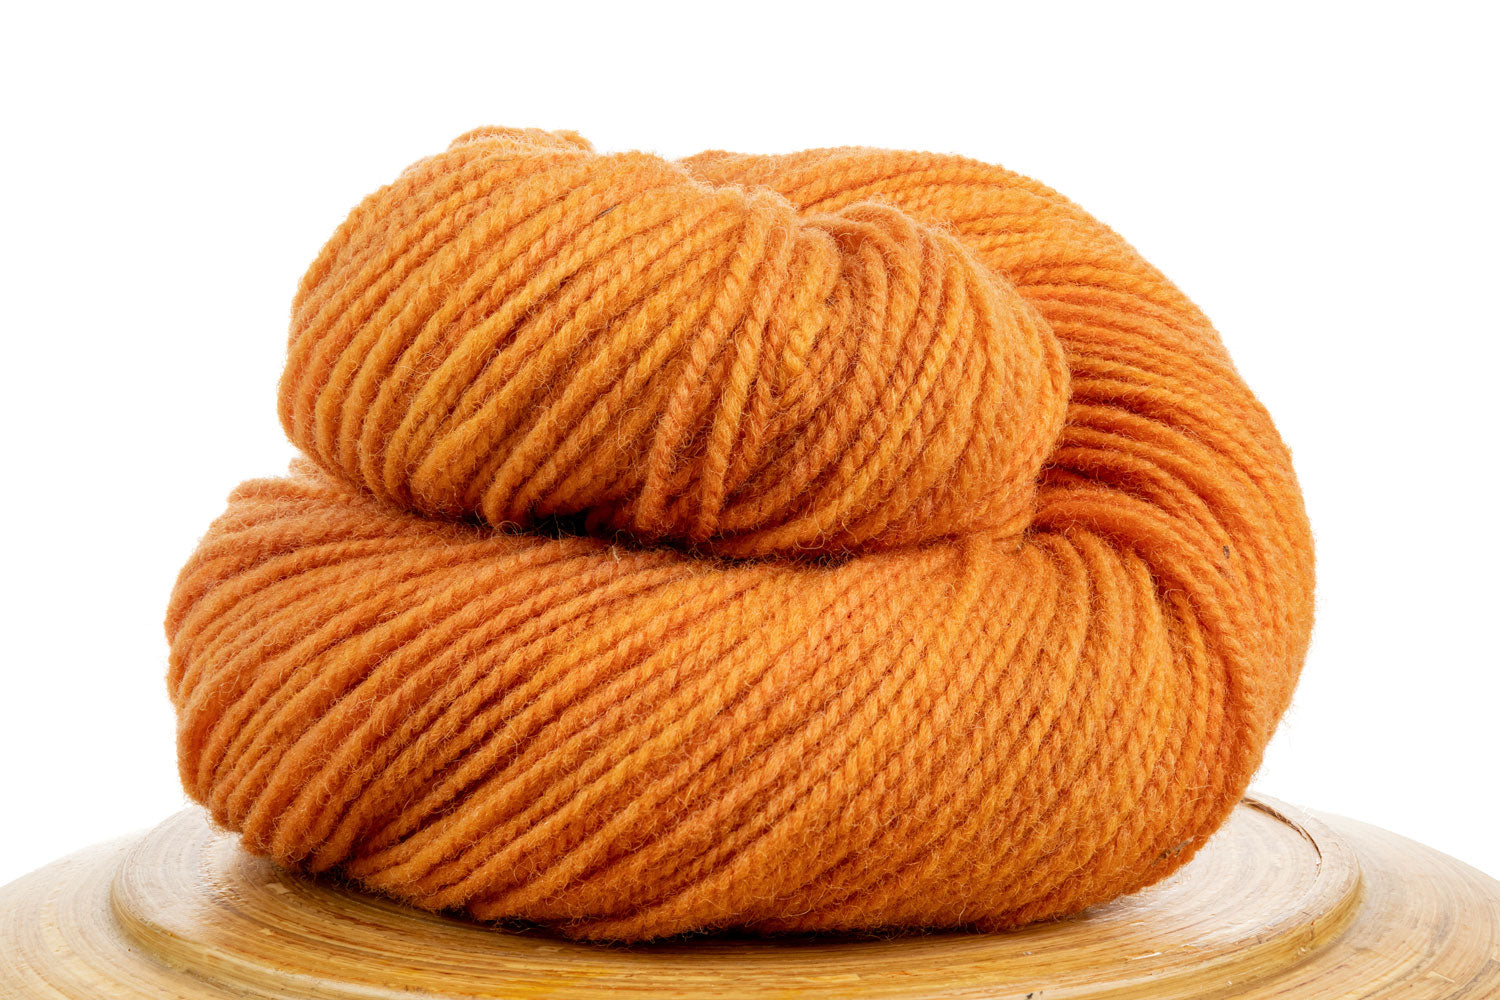 Winfield Canadian hand-dyed wool yarn in Zest, a bright orange